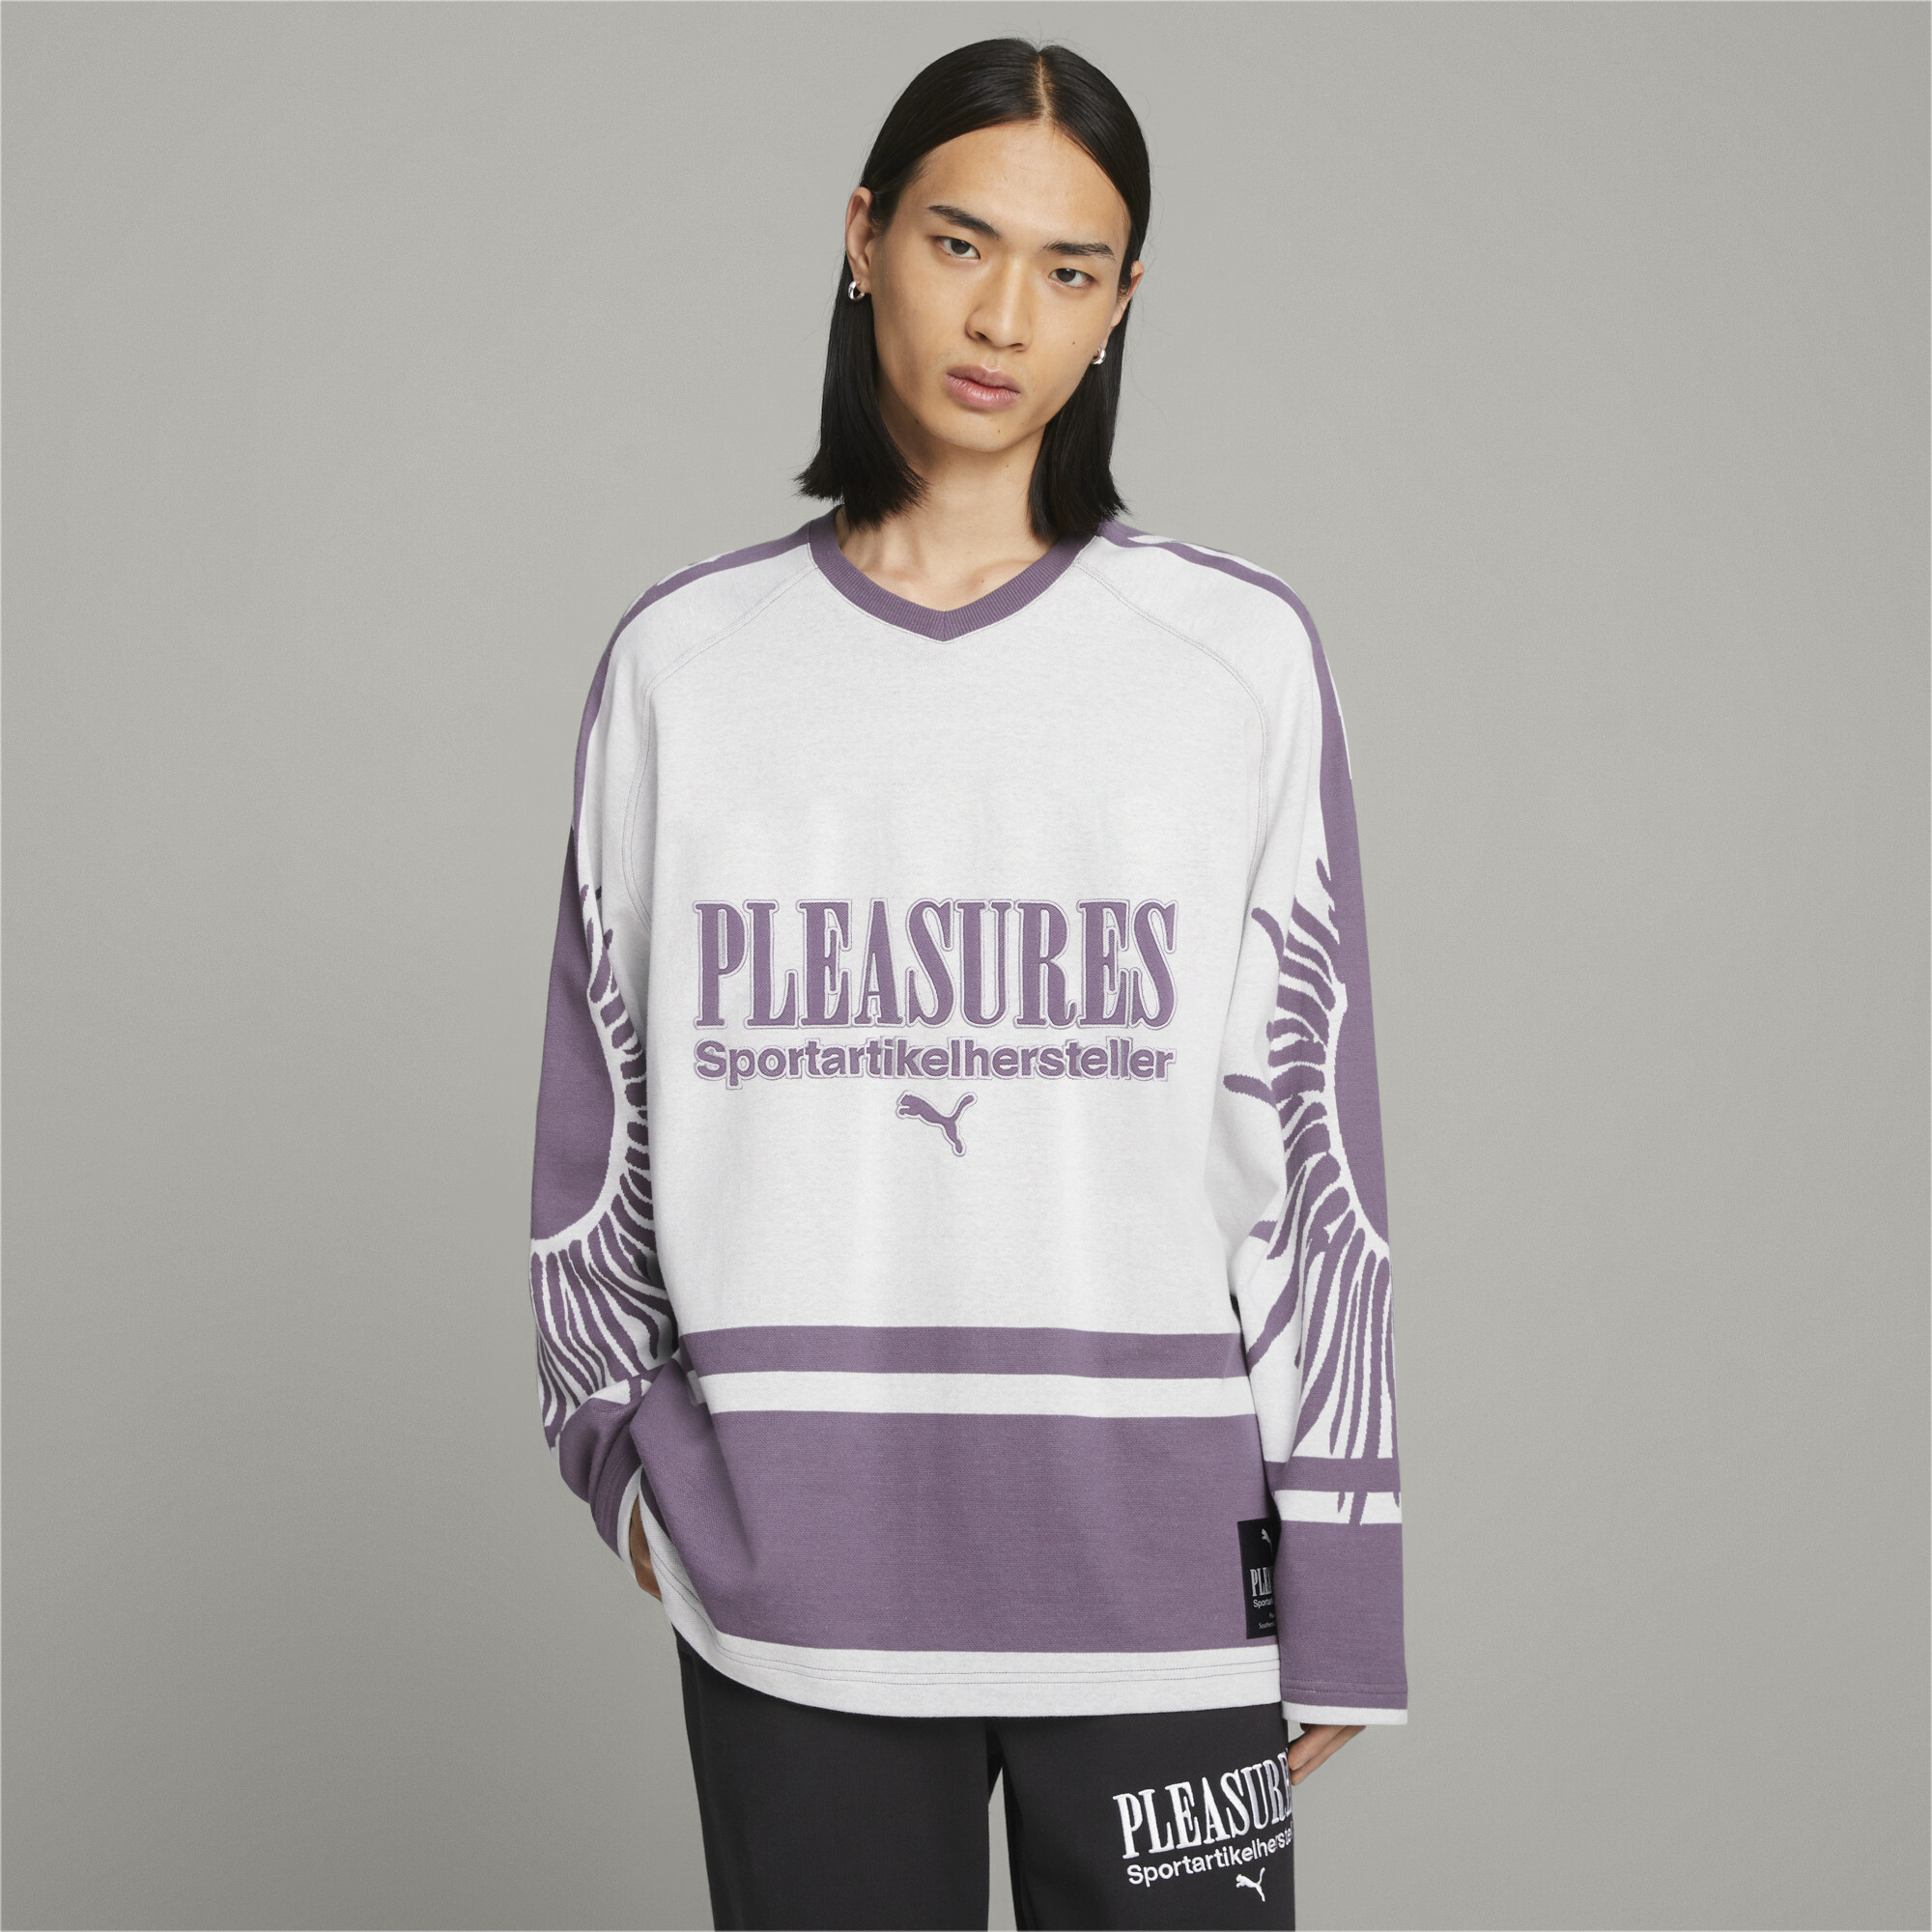 Men's Puma X PLEASURES's Ice Hockey Jersey, White, Size XL, Clothing